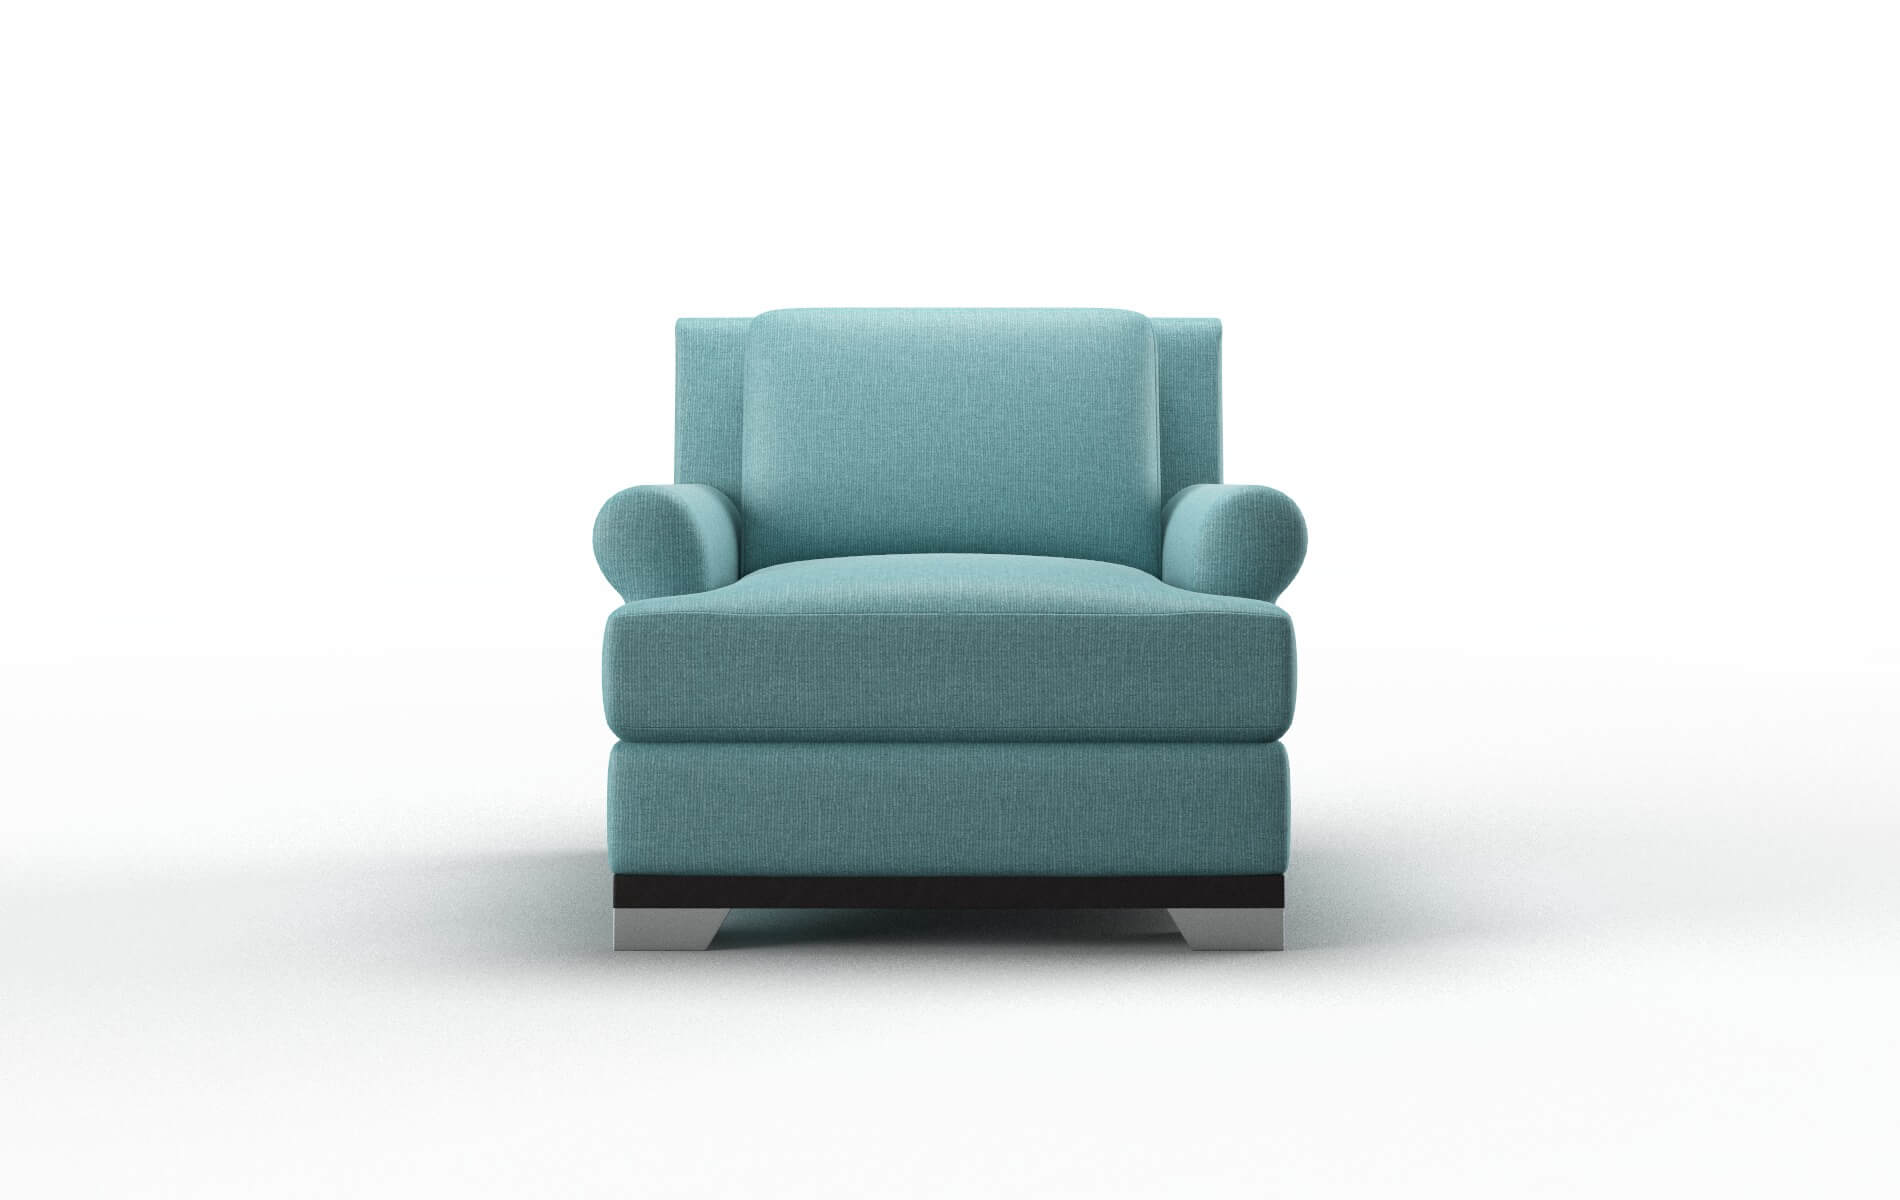 Newyork Parker Turquoise chair espresso legs